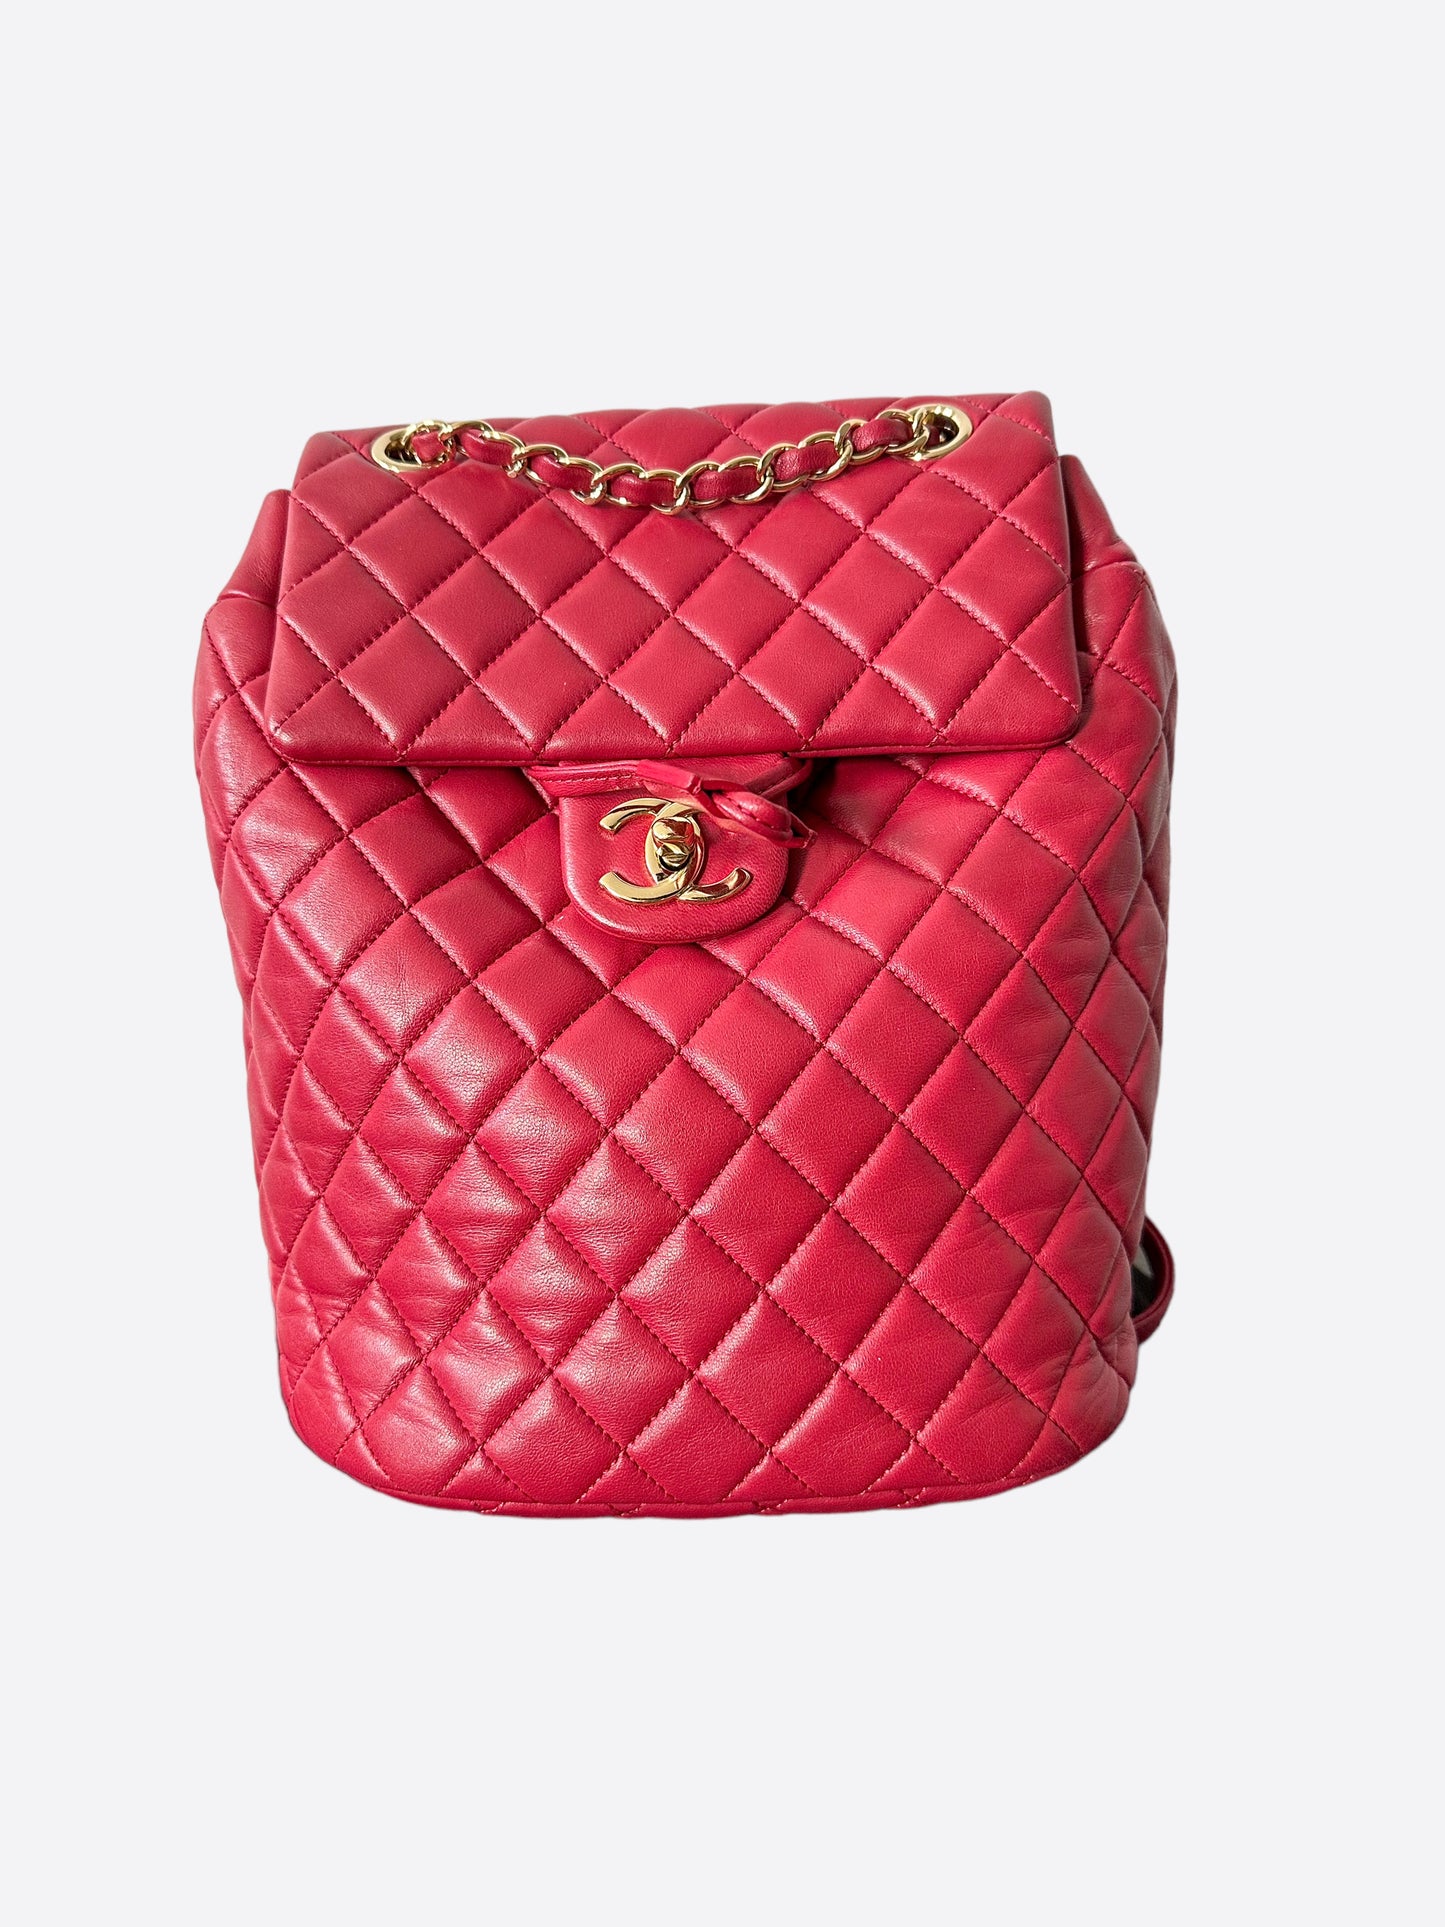 red chanel backpack bag